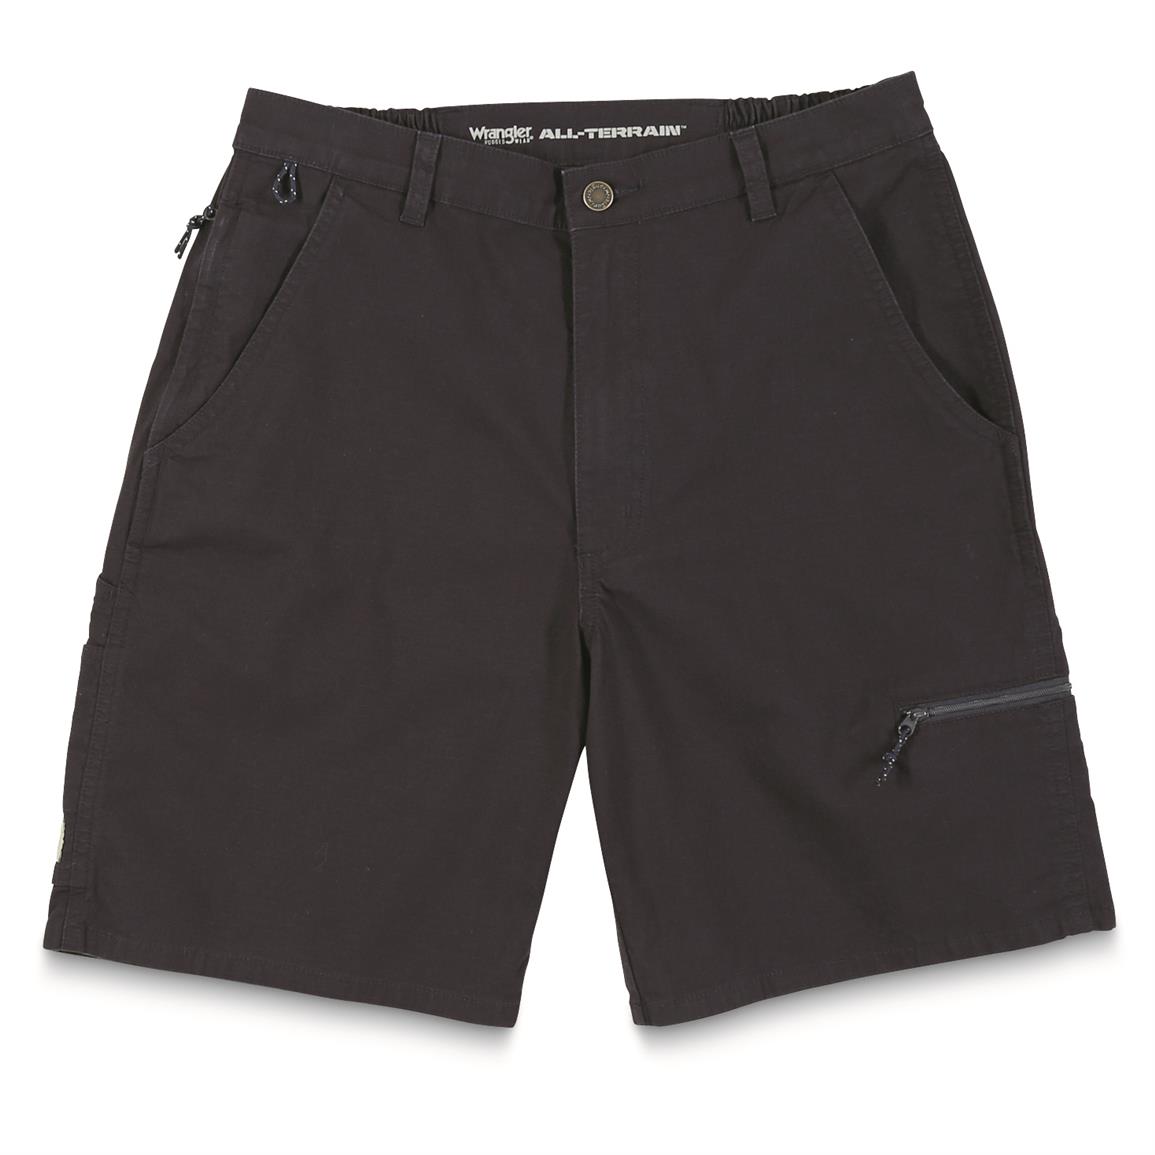 Wrangler Men's Linecaster Shorts - 676409, Shorts at Sportsman's Guide